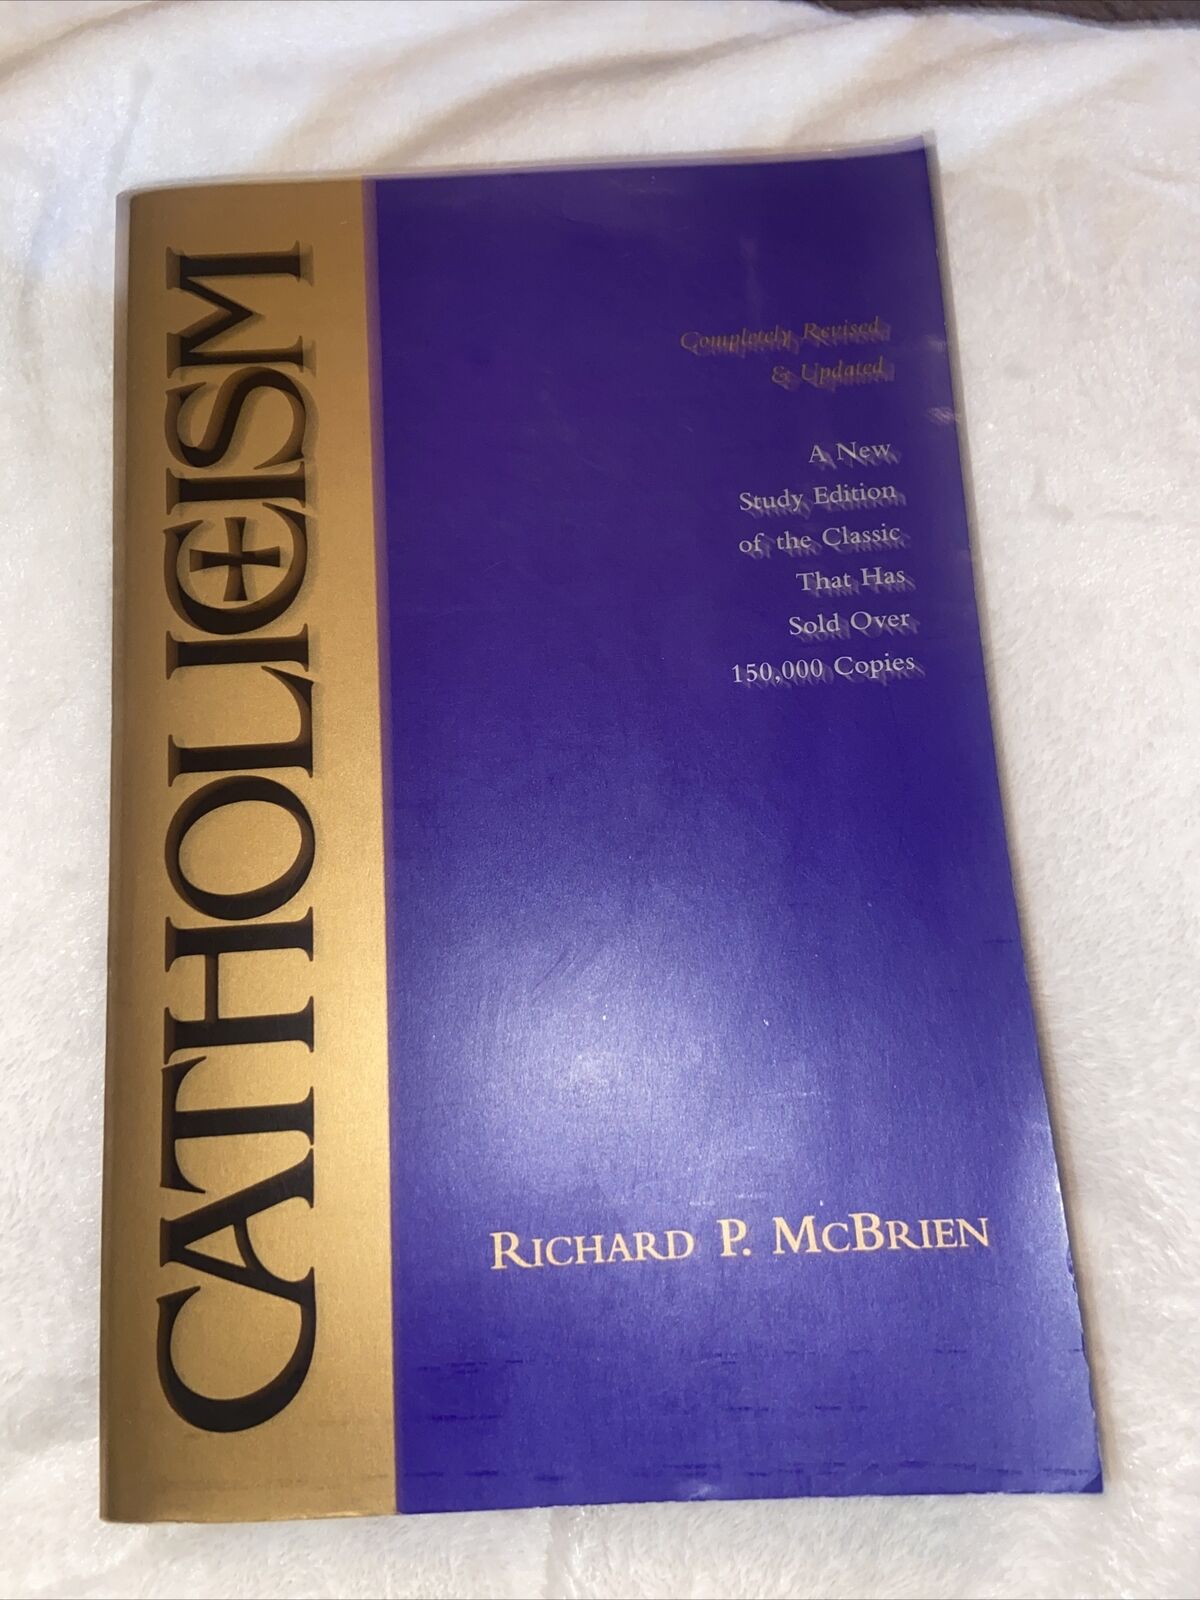 Richard P. McBrien Paperback catholicism